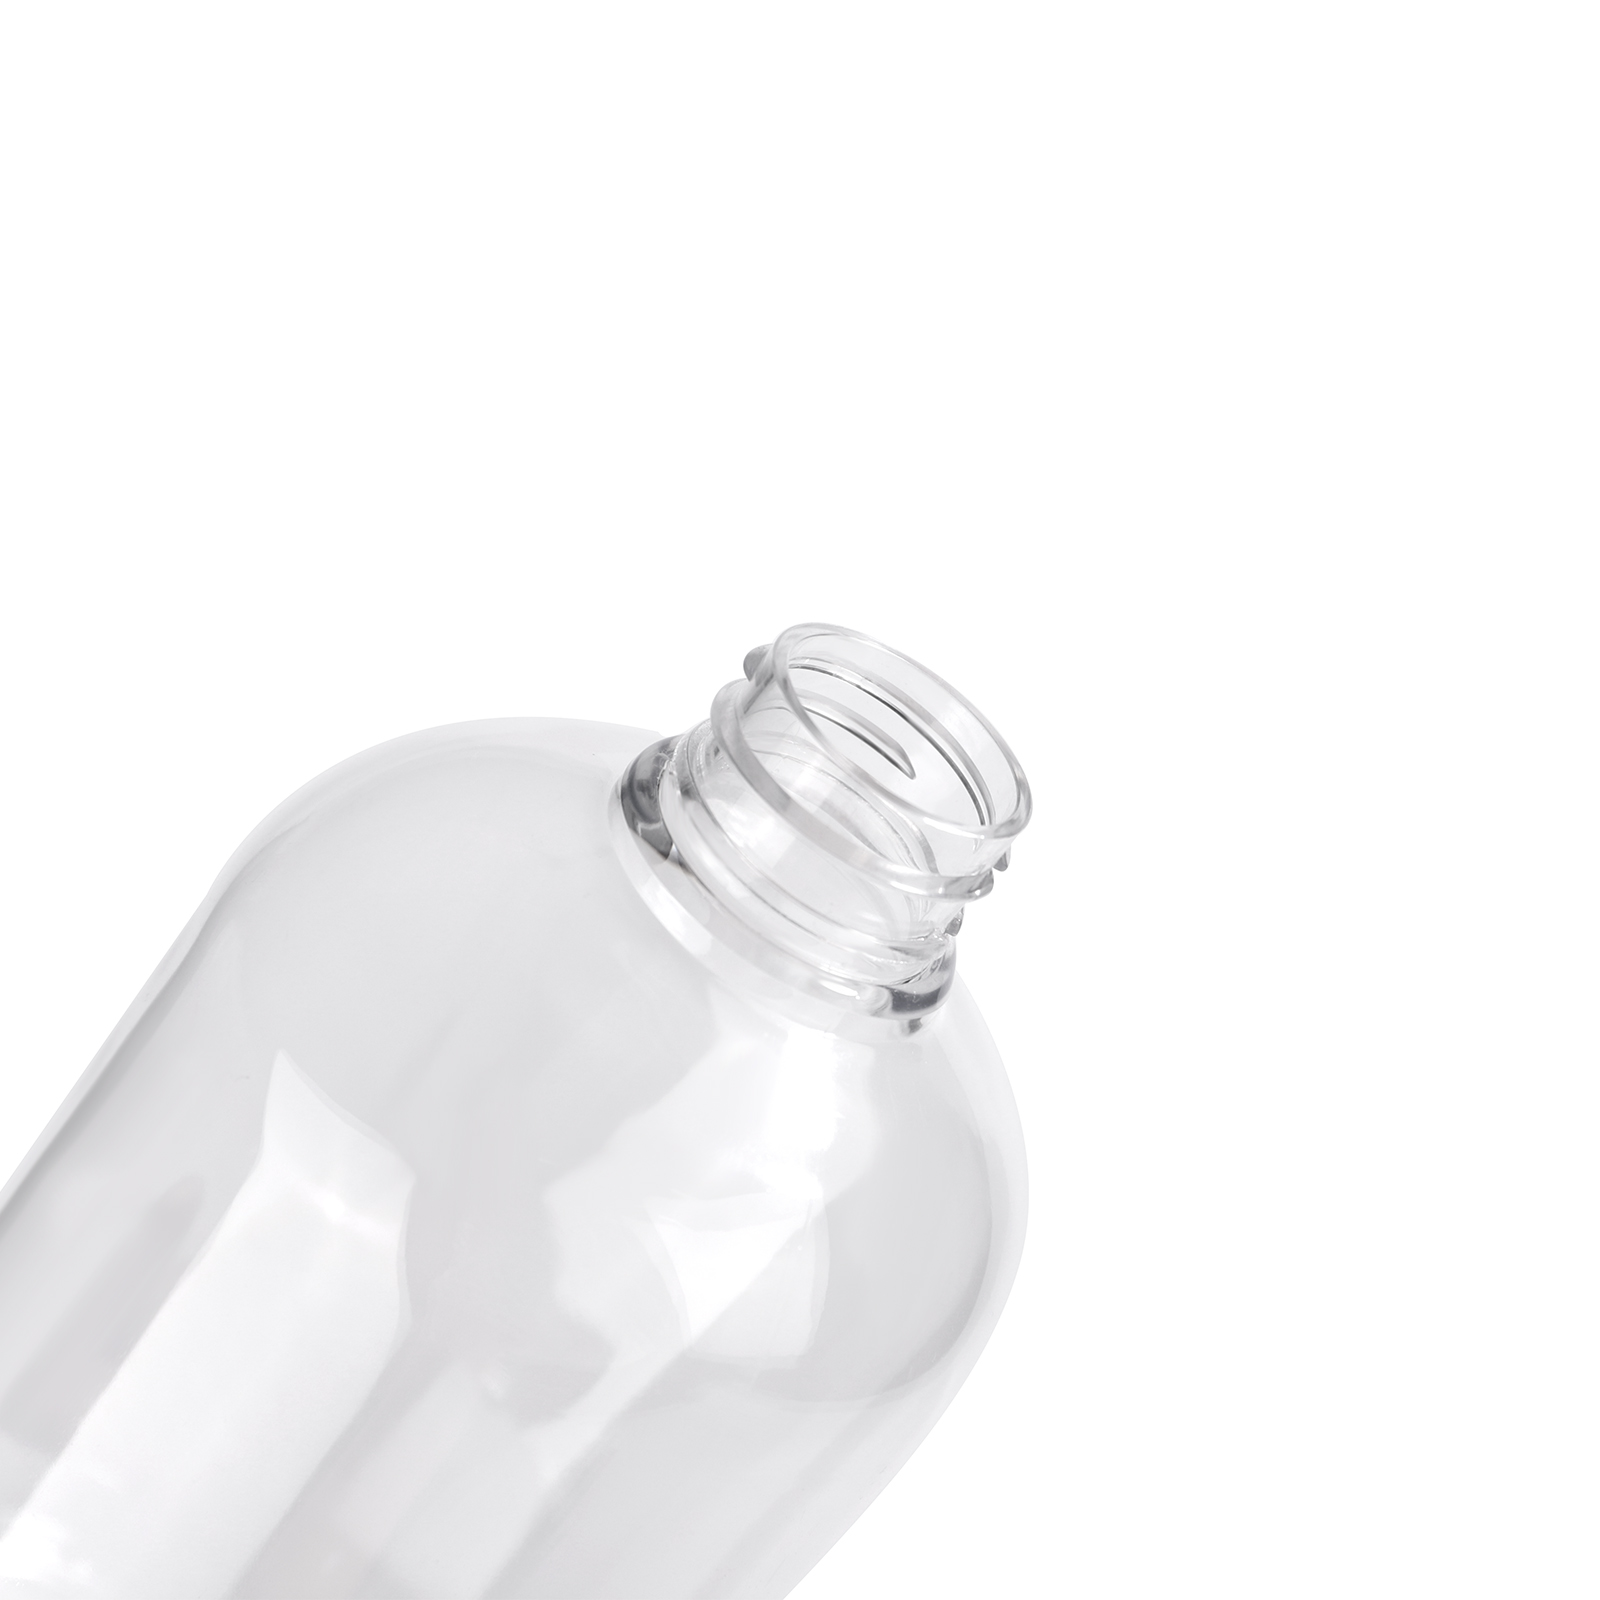 China manufacture 300ml empty clear PET plastic hand sanitizer pump bottle